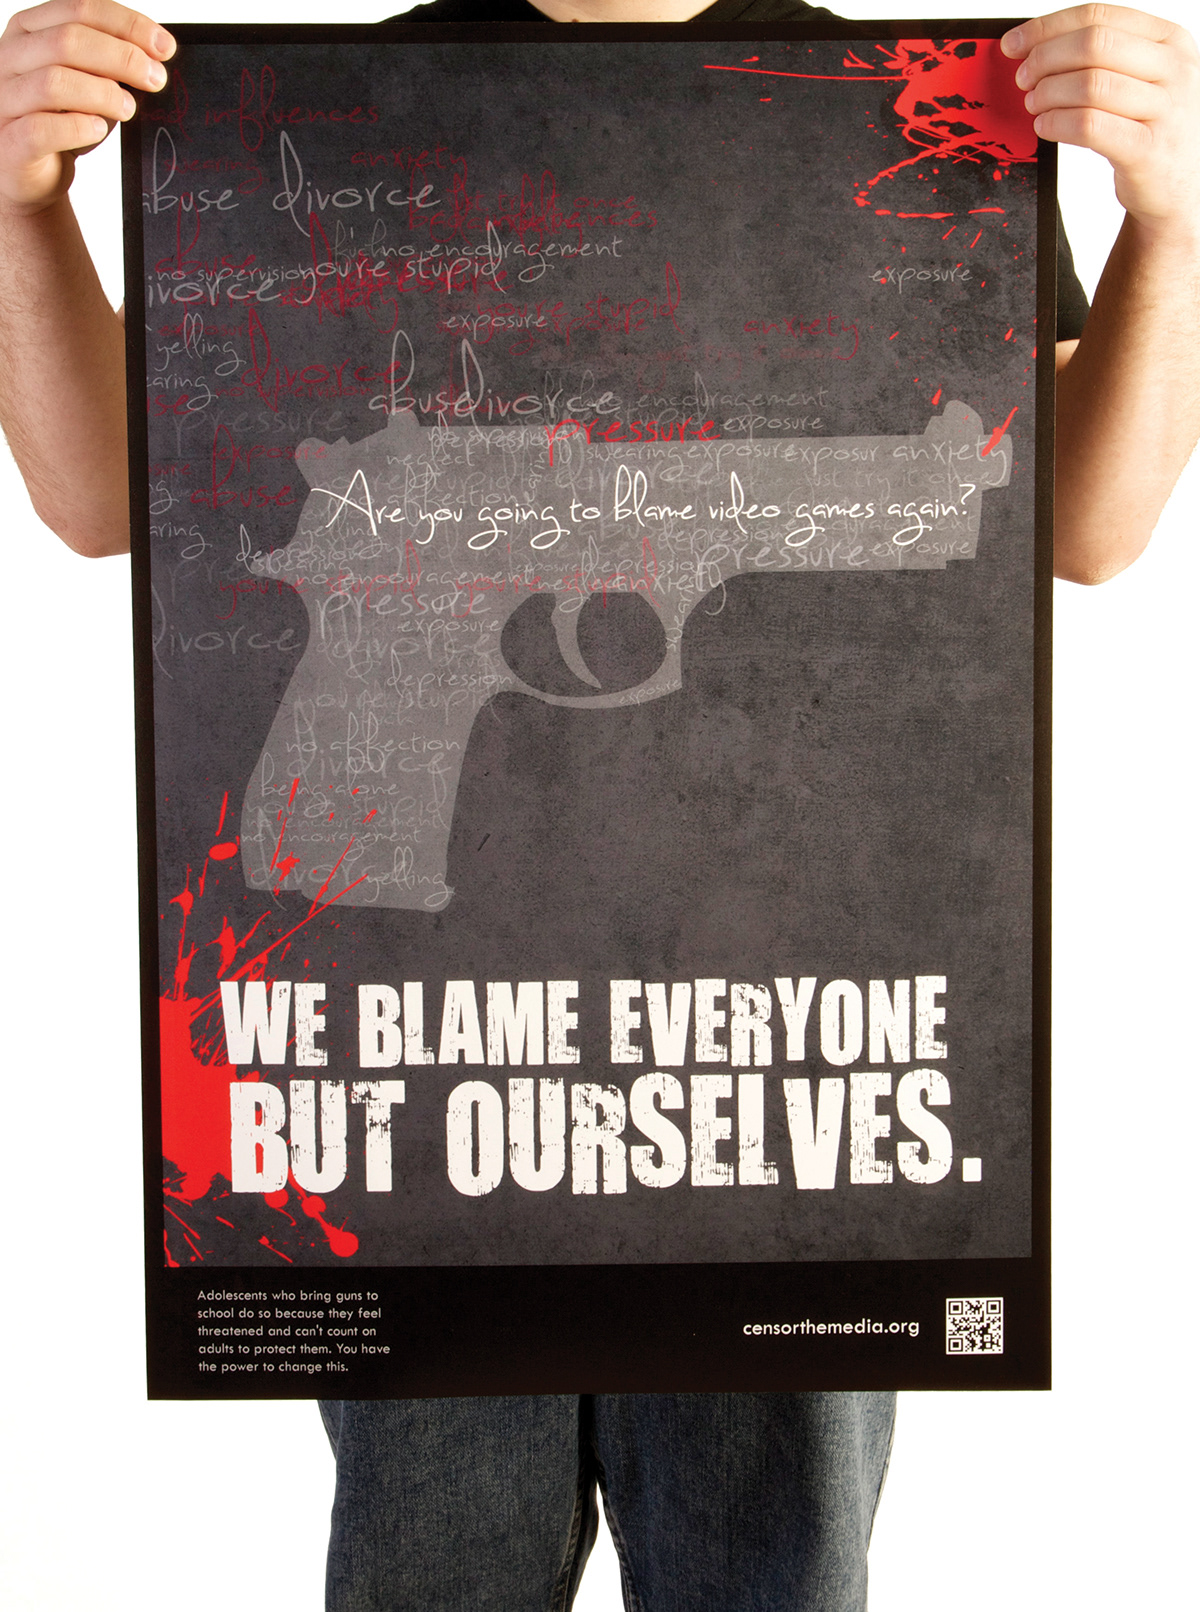 photoshop InDesign Promotional political stop gun violence